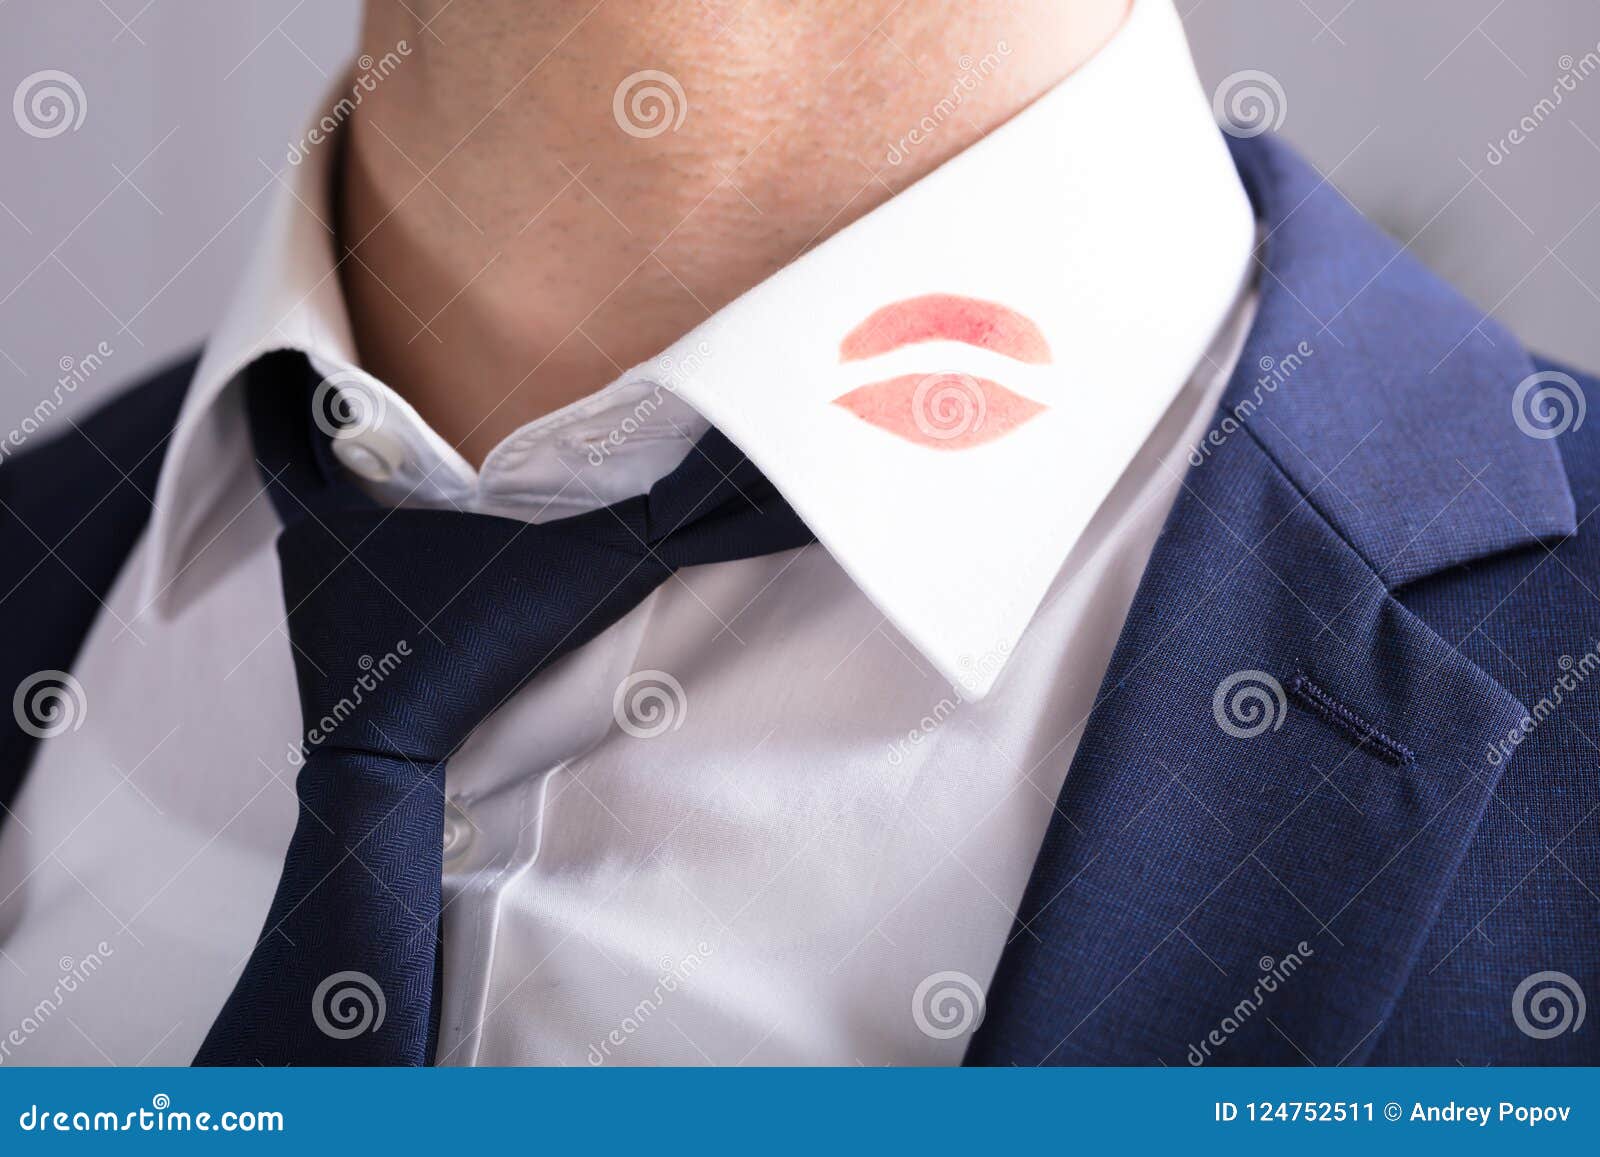 businessman with lipstick kiss marks on shirt`s collar